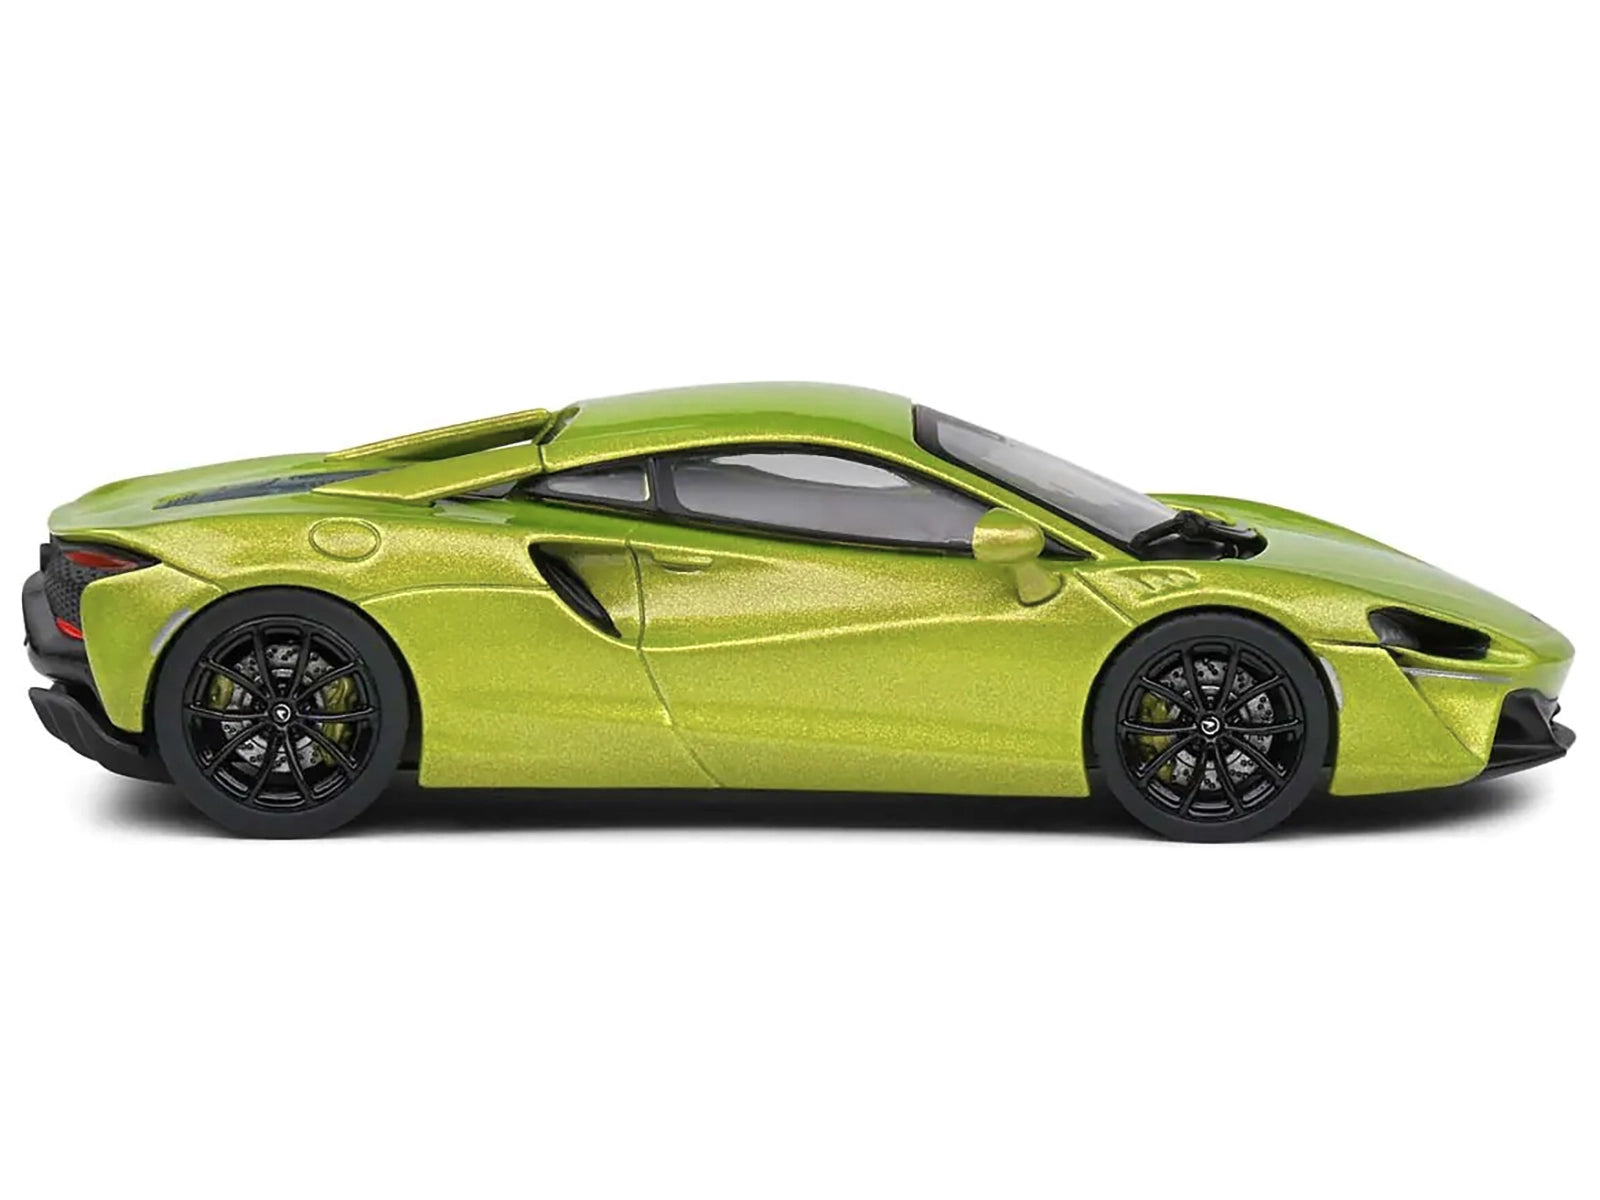 mclaren artura hybrid supercar light green metallic 1/43 diecast model car